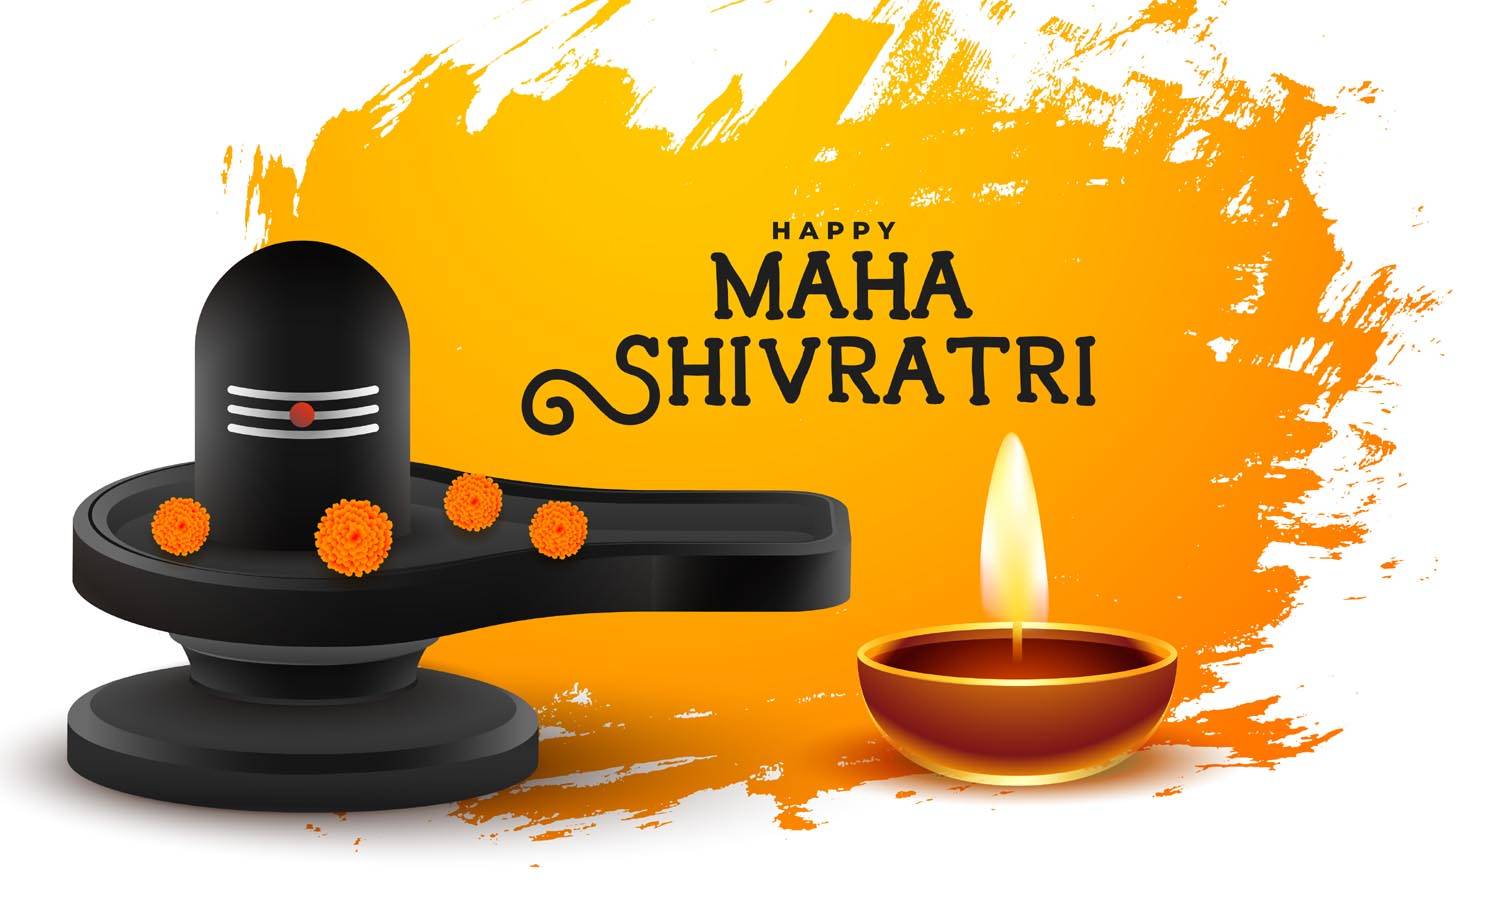 Maha Shivratri wishes for family - Shivaratri Image Messages